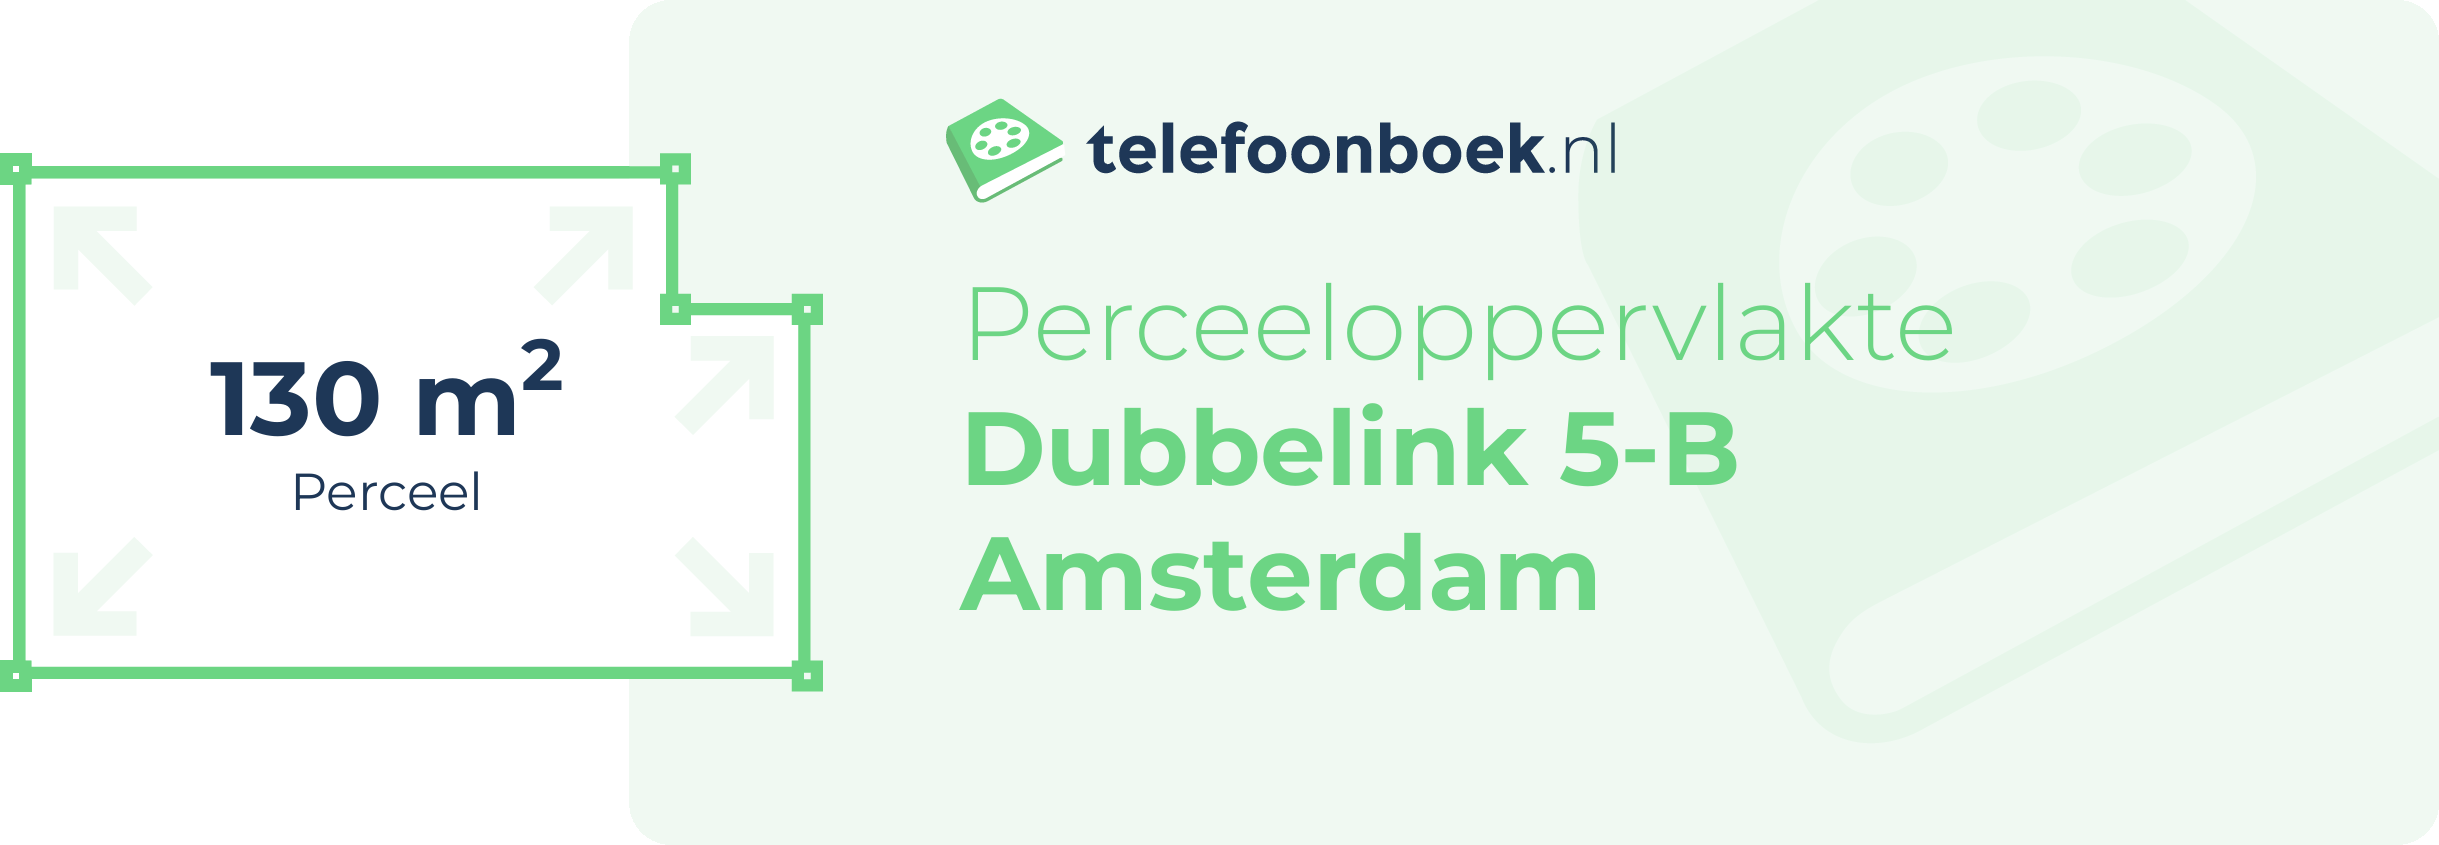 Perceeloppervlakte Dubbelink 5-B Amsterdam